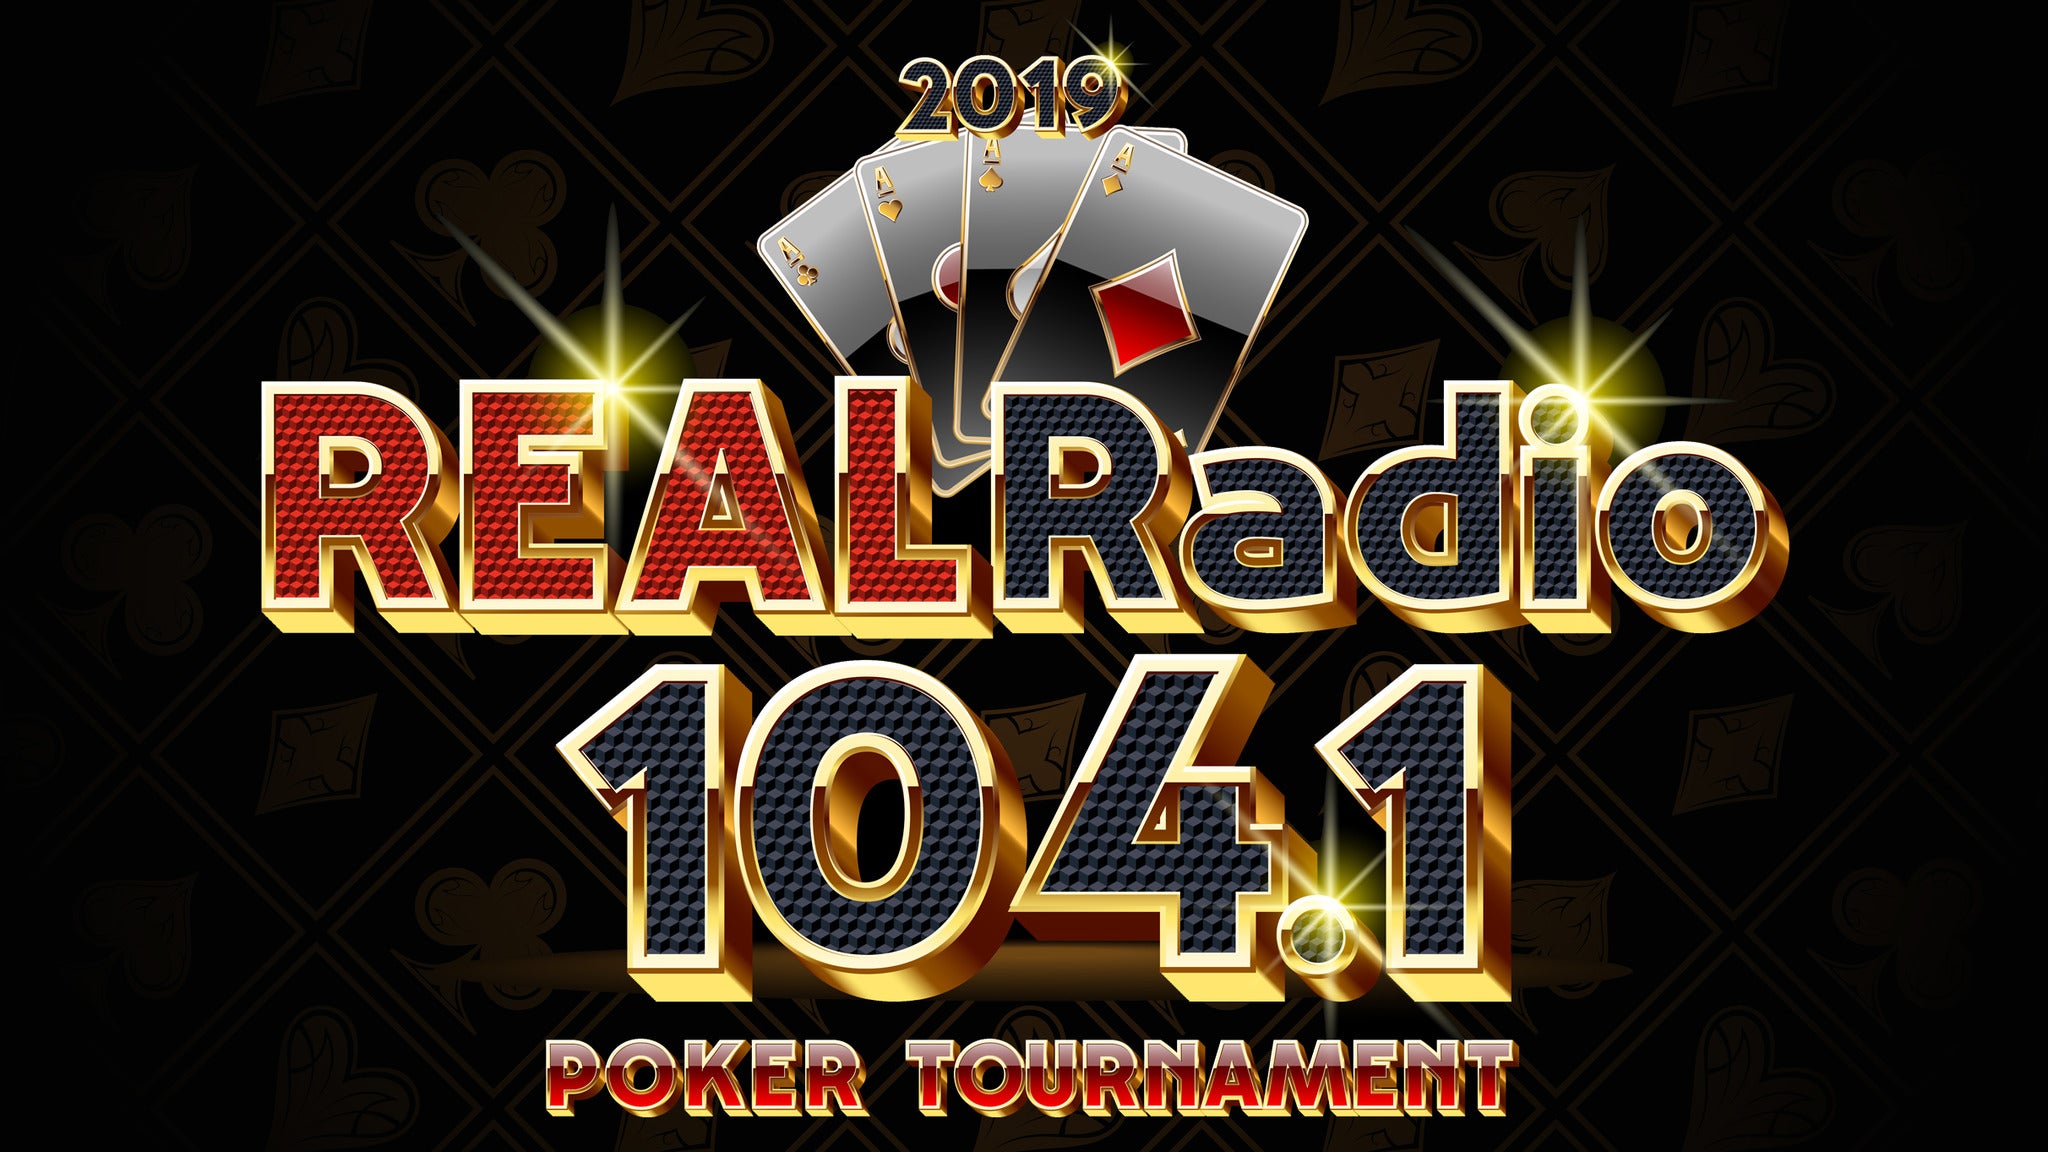 Real Radio 104.1 Poker Tournament presale information on freepresalepasswords.com